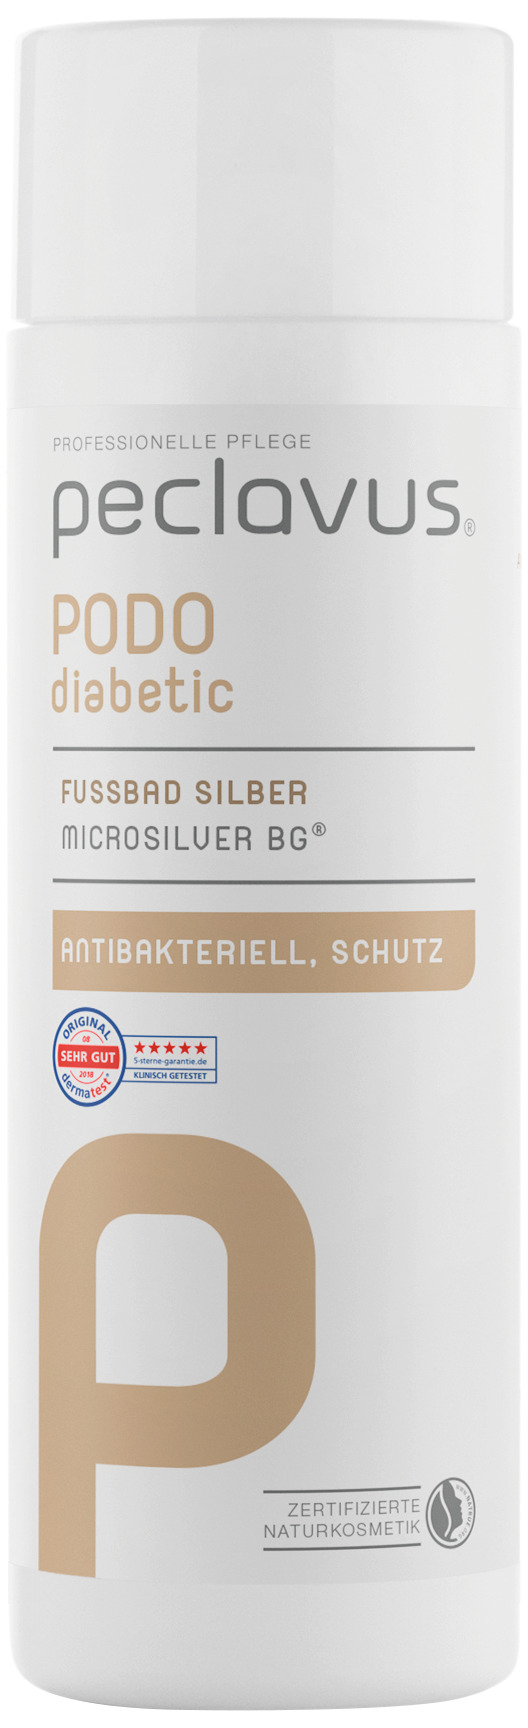 Peclavus PODOdiabetic Fußbad Silber | 150 ml